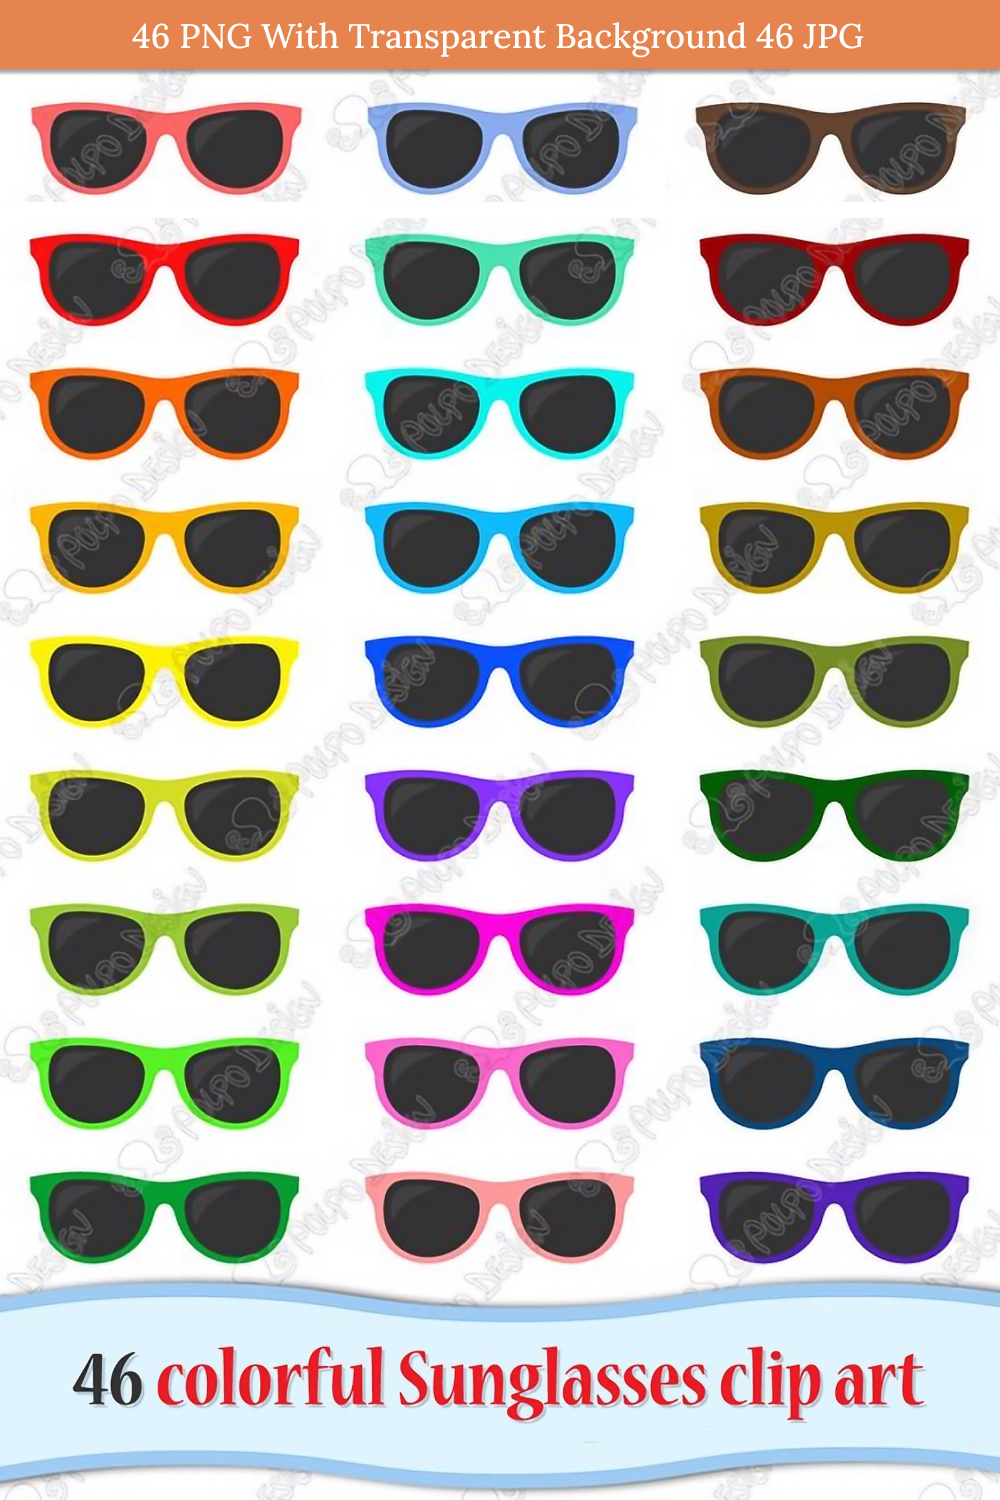 Colorful Sunglasses Clipart Pinterest Cover.